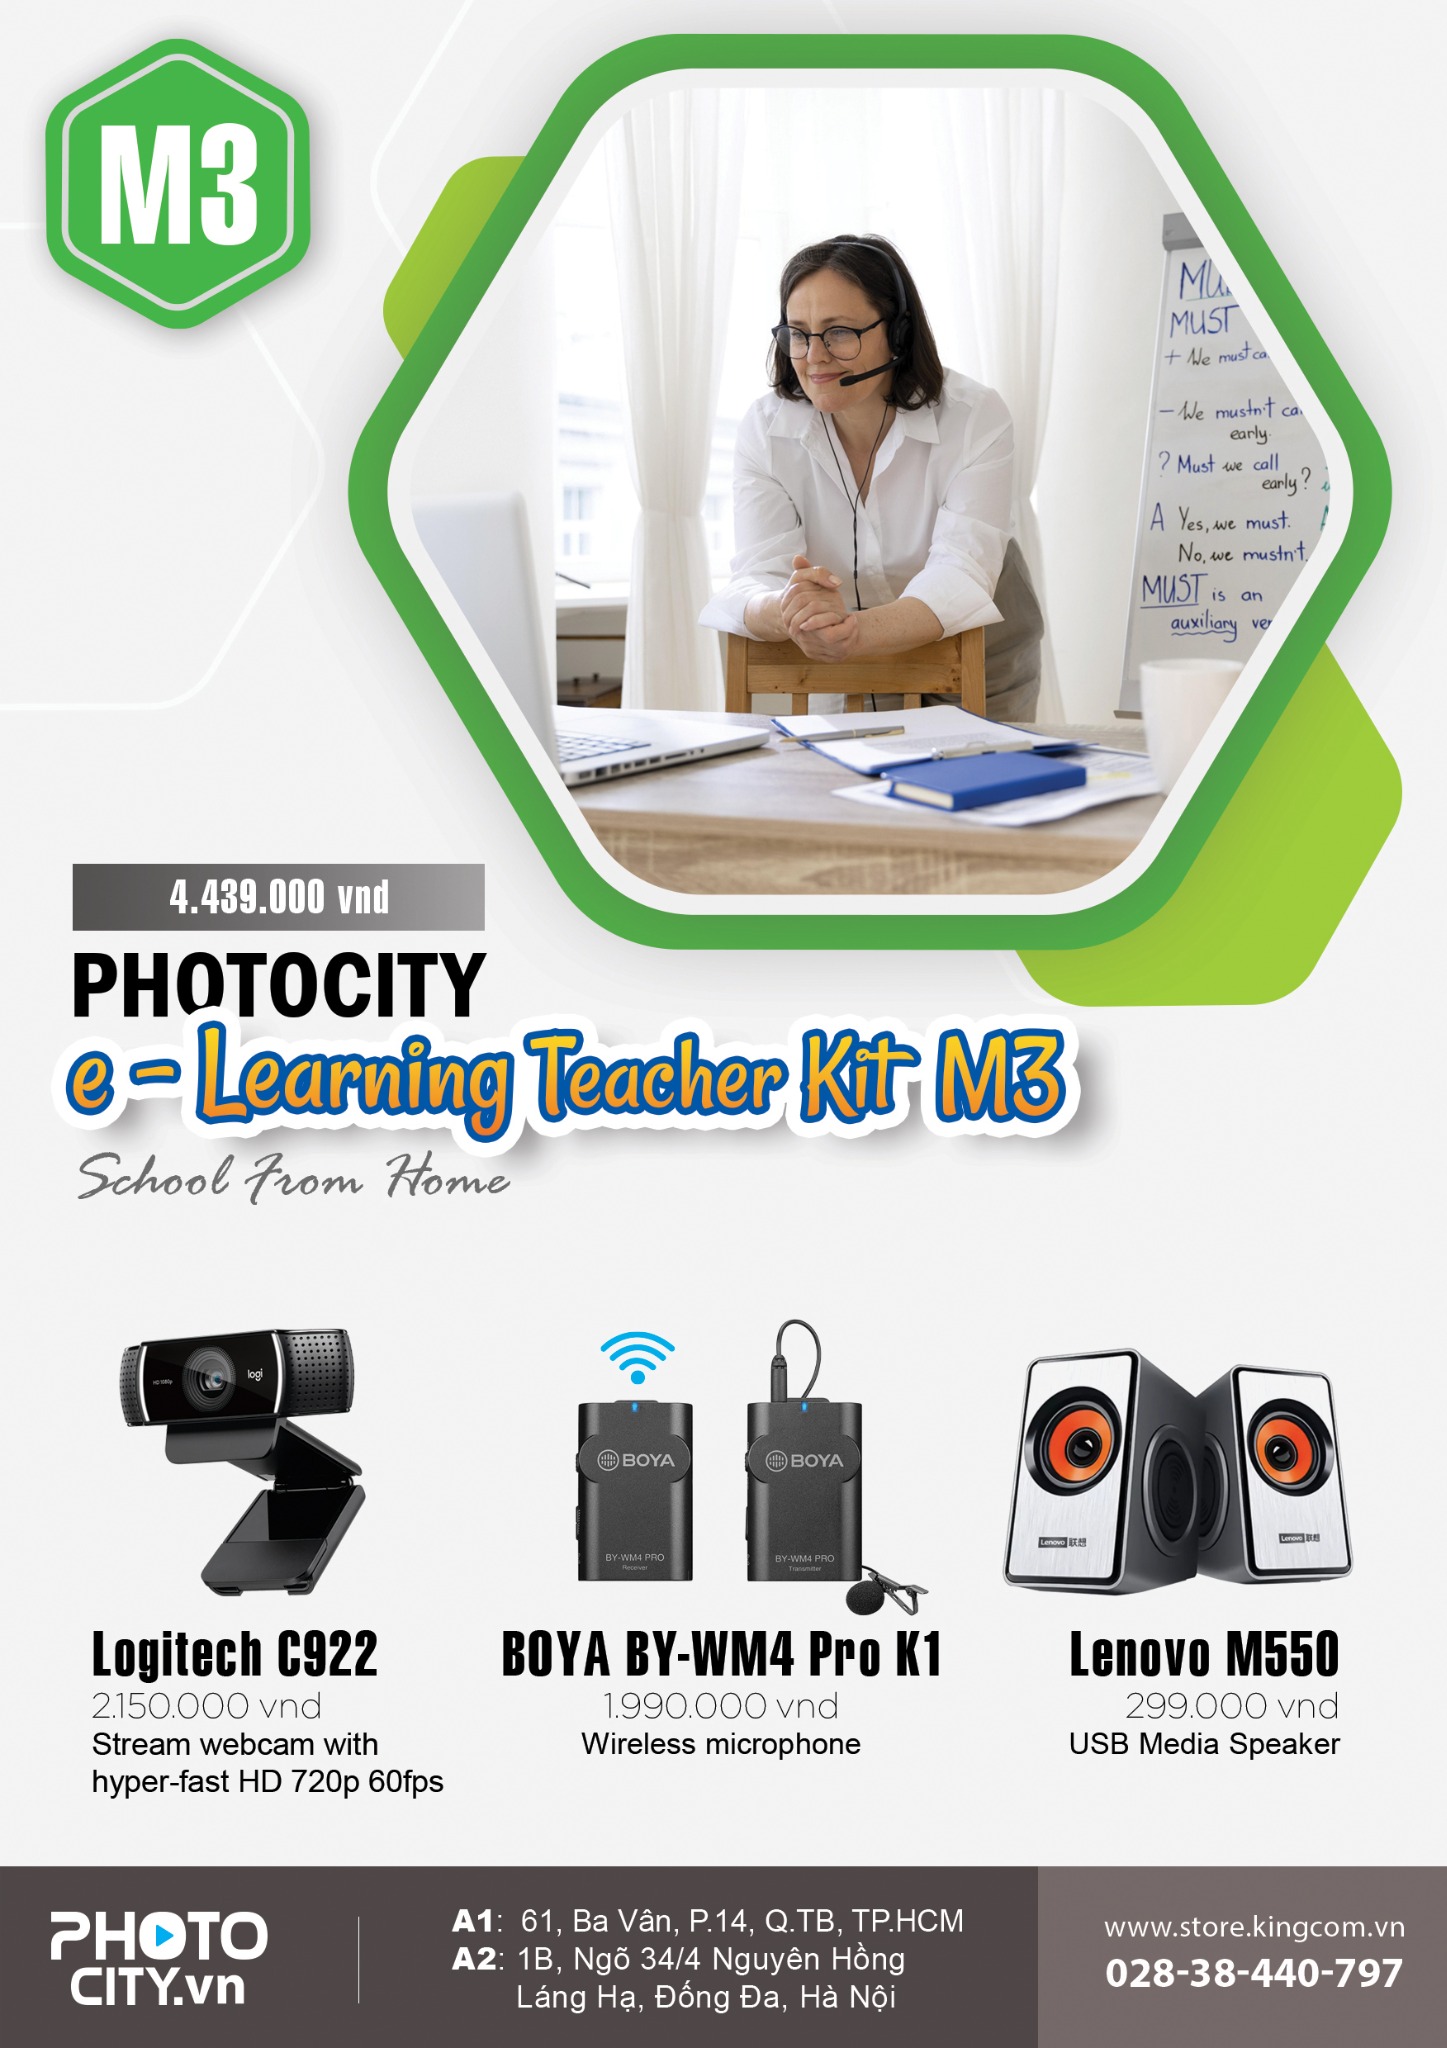 PhotoCity e -learning Teacher Kit M3 (Bộ dụng cụ dạy học online)